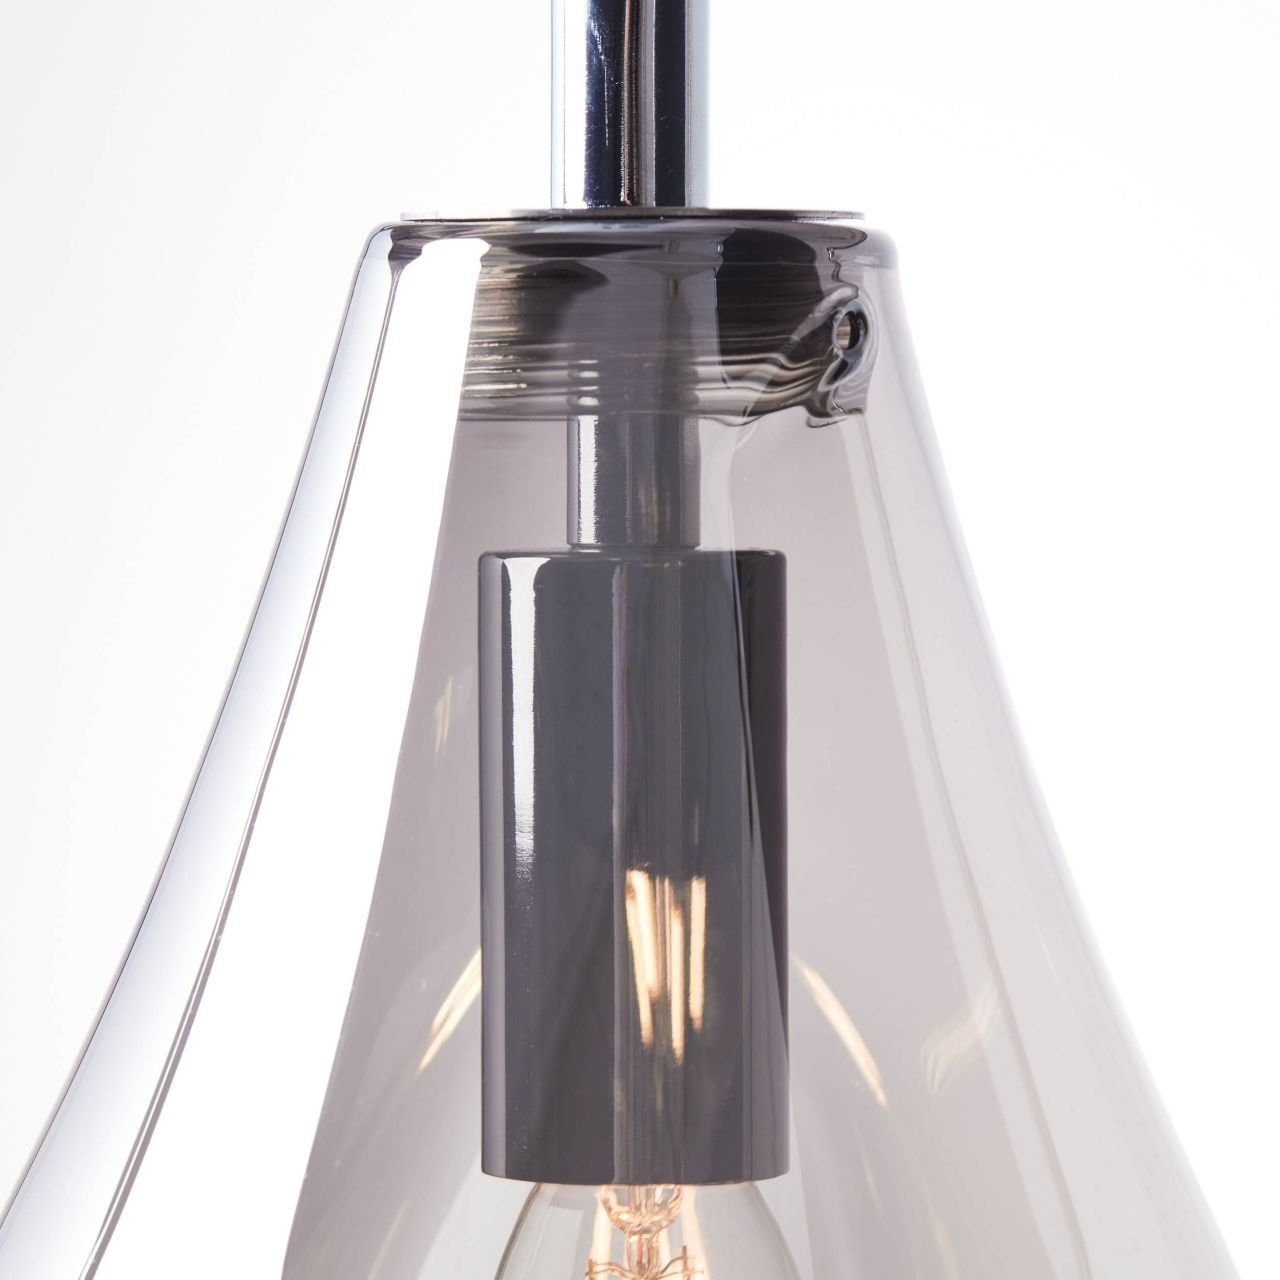 Drops Pendelleuchte Lampe, 1x 1flg Drops, rauchglas/chrom, Pendelleuchte Brilliant Glas/Metall, D45